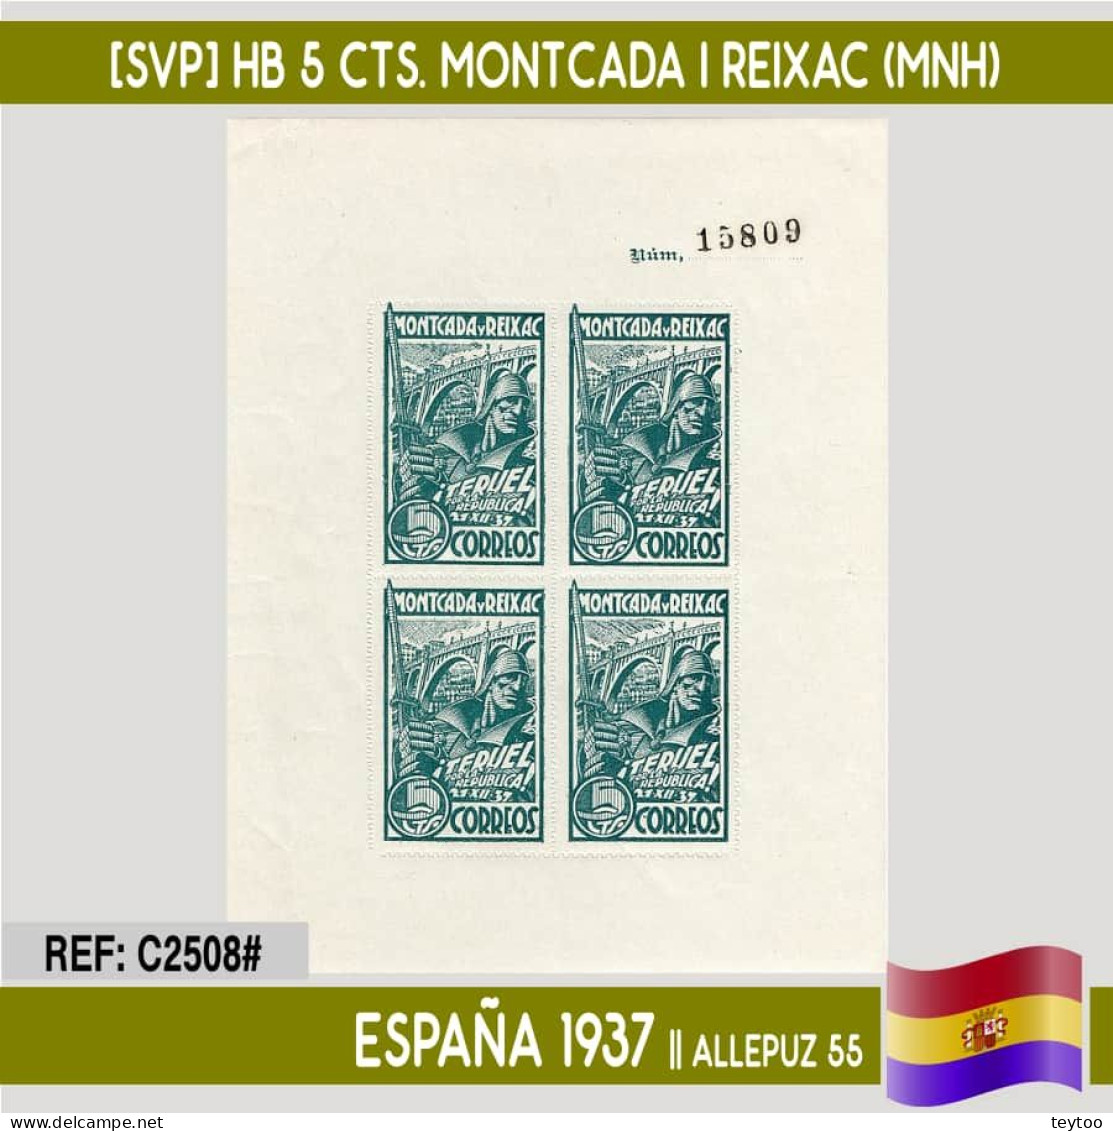 C2508# España 1937 [SVP] HB 5 Cts. Teruel Por La República (MNH) - Emissions Républicaines